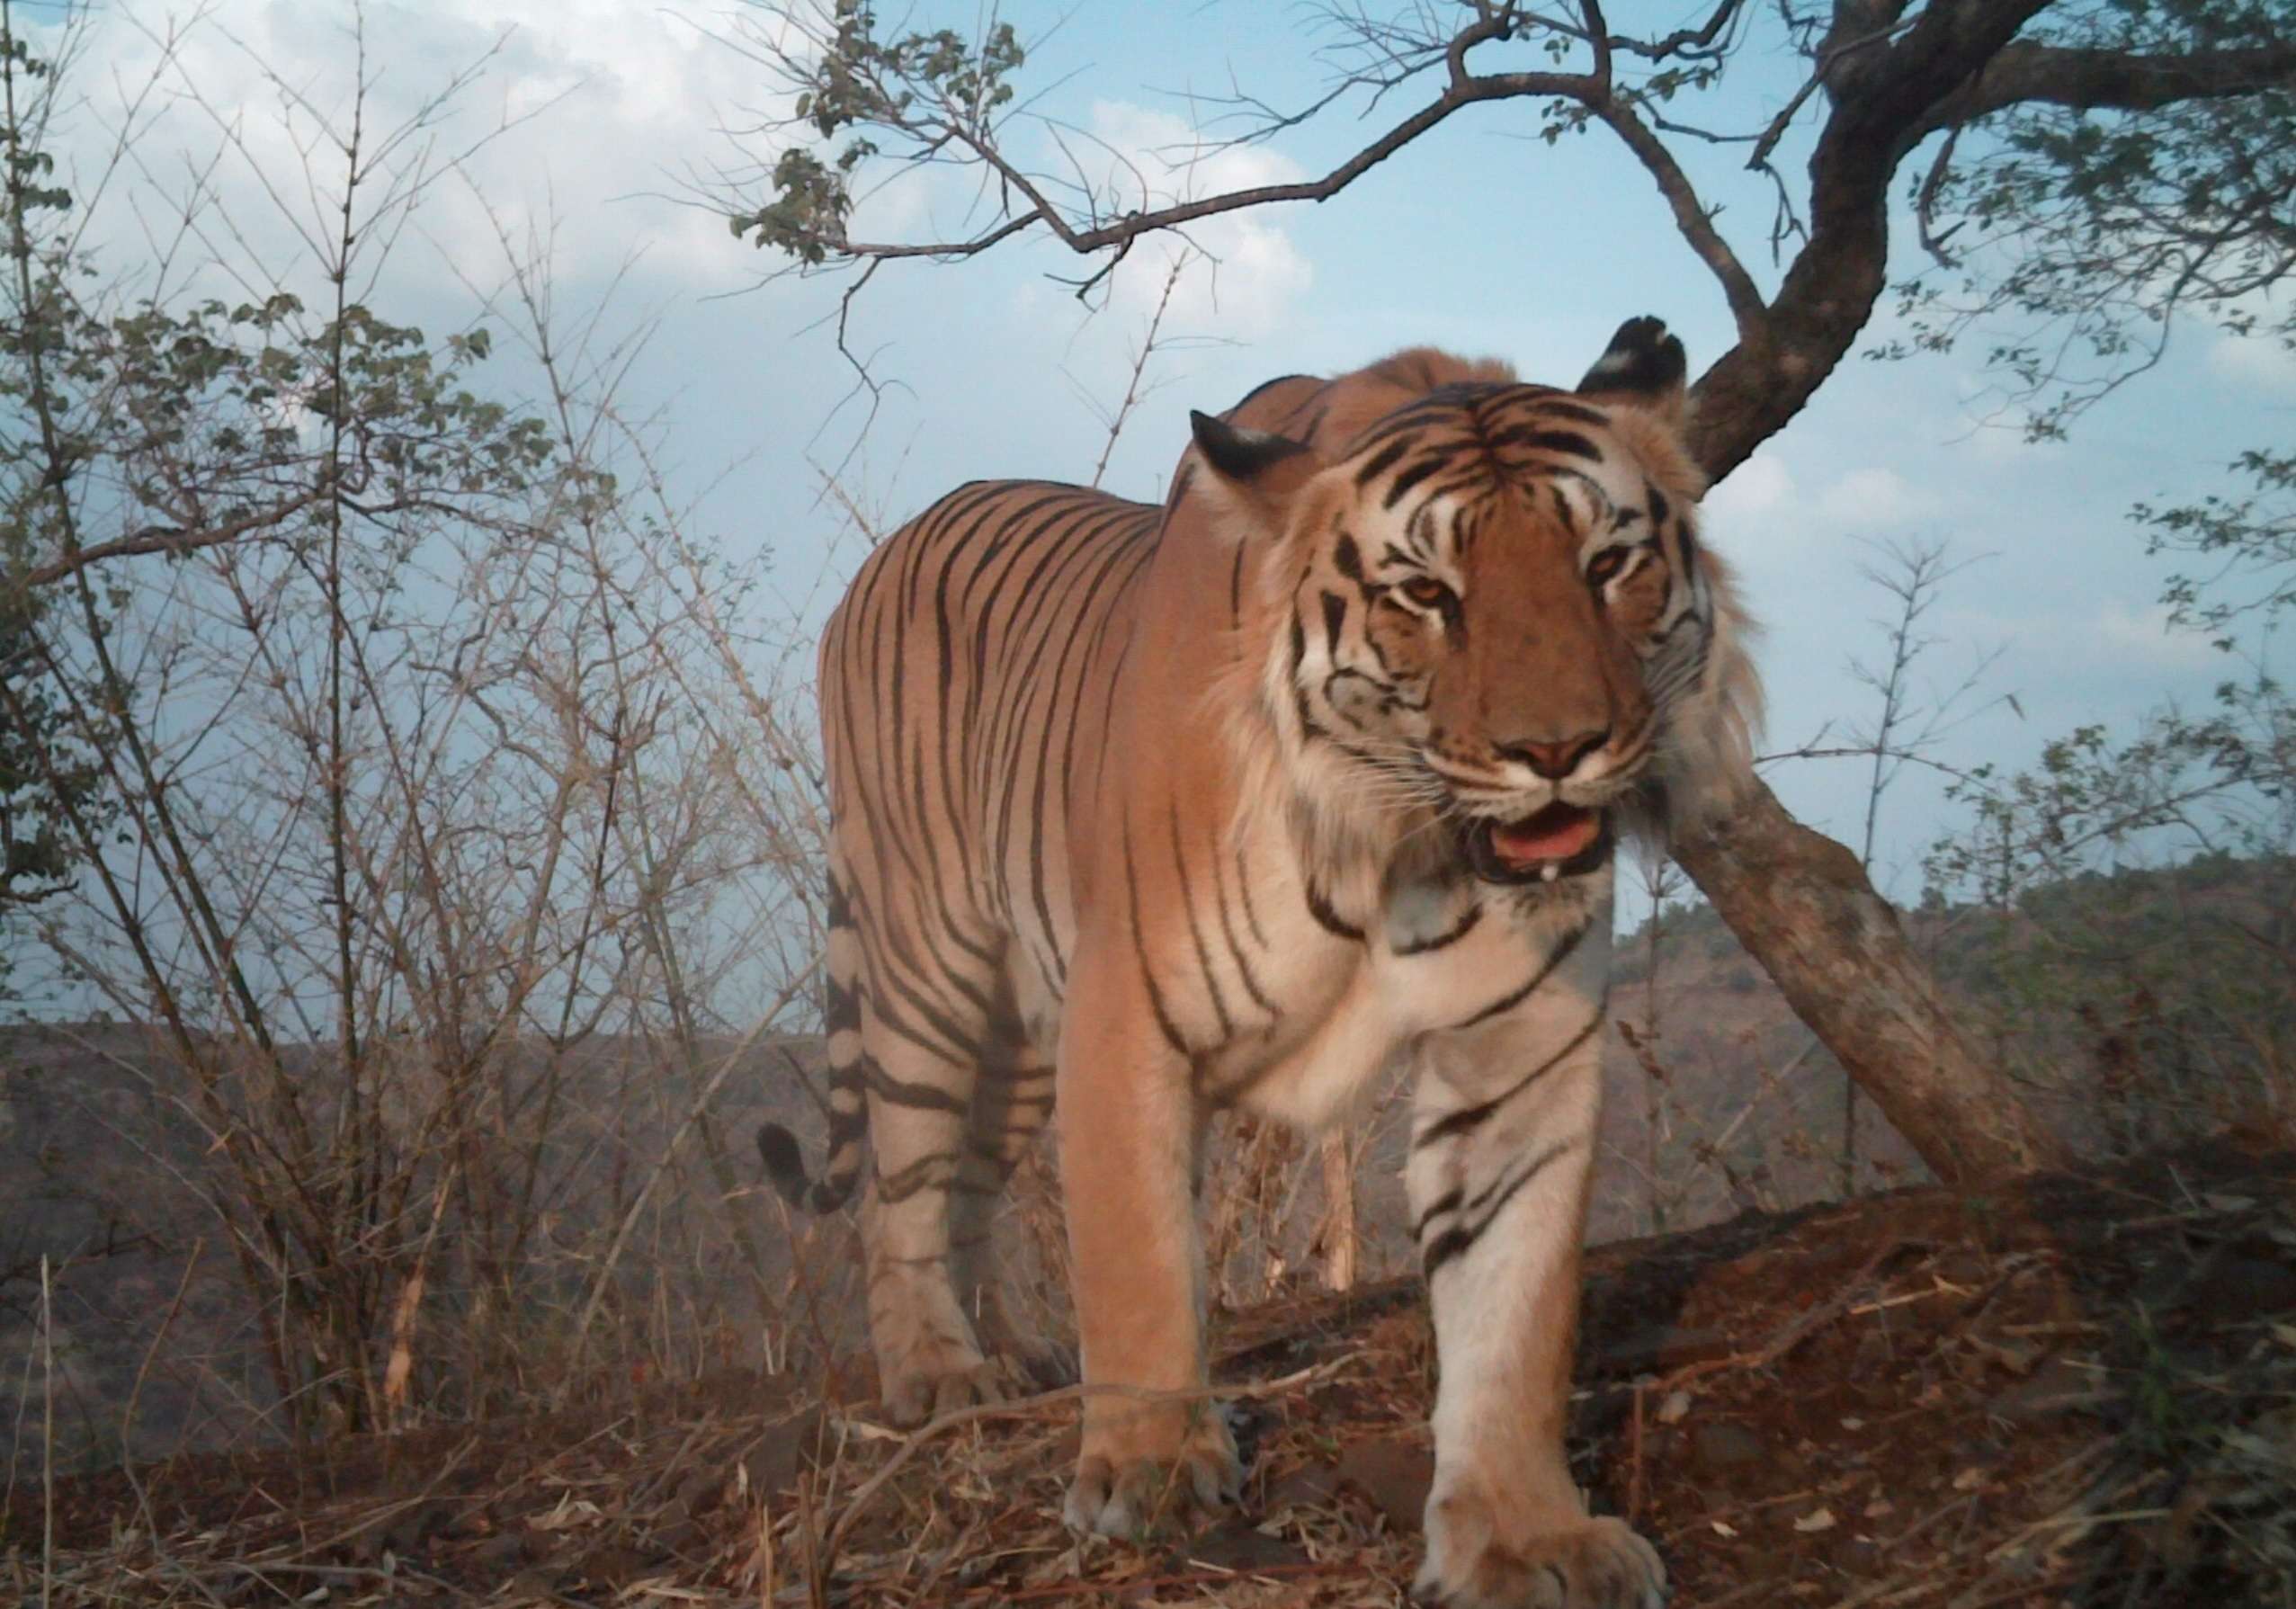 Jungles near Tiger Capital of India, Nagpur, Maharashtra - The Live Nagpur